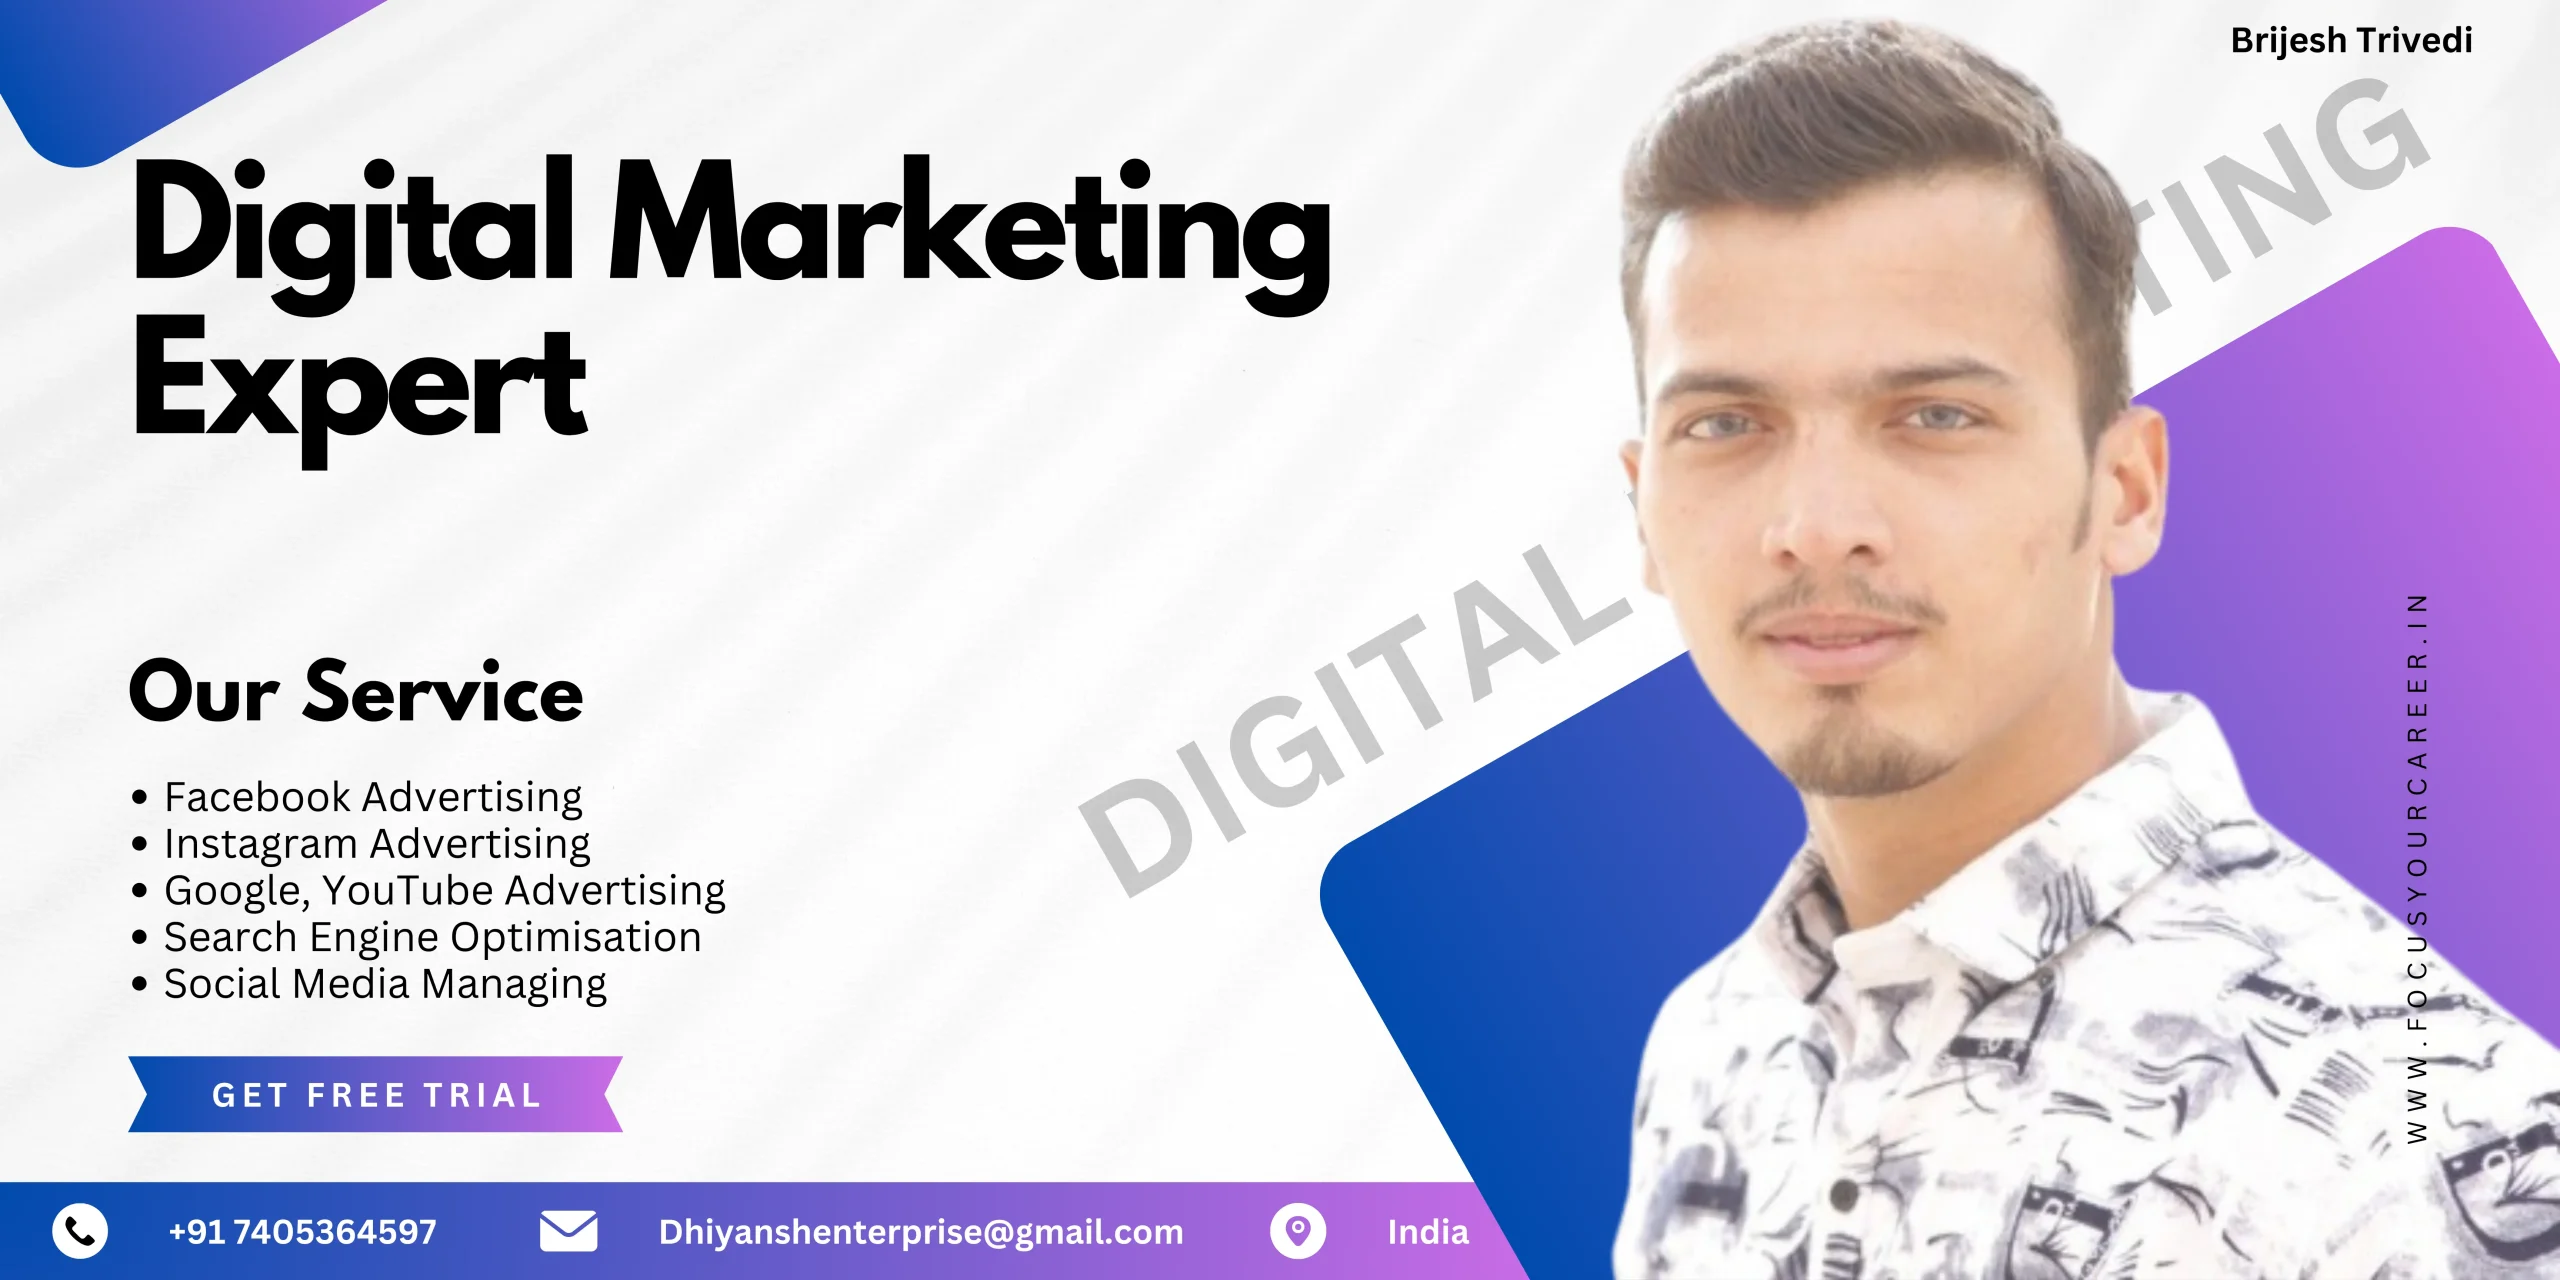 Image Describe Digital Marketing Services by Brijesh Trivedi. He Offers Facebook Ads, Instagram Ads, Google Ads, SEO Service. He Offers 15 Days Free trial